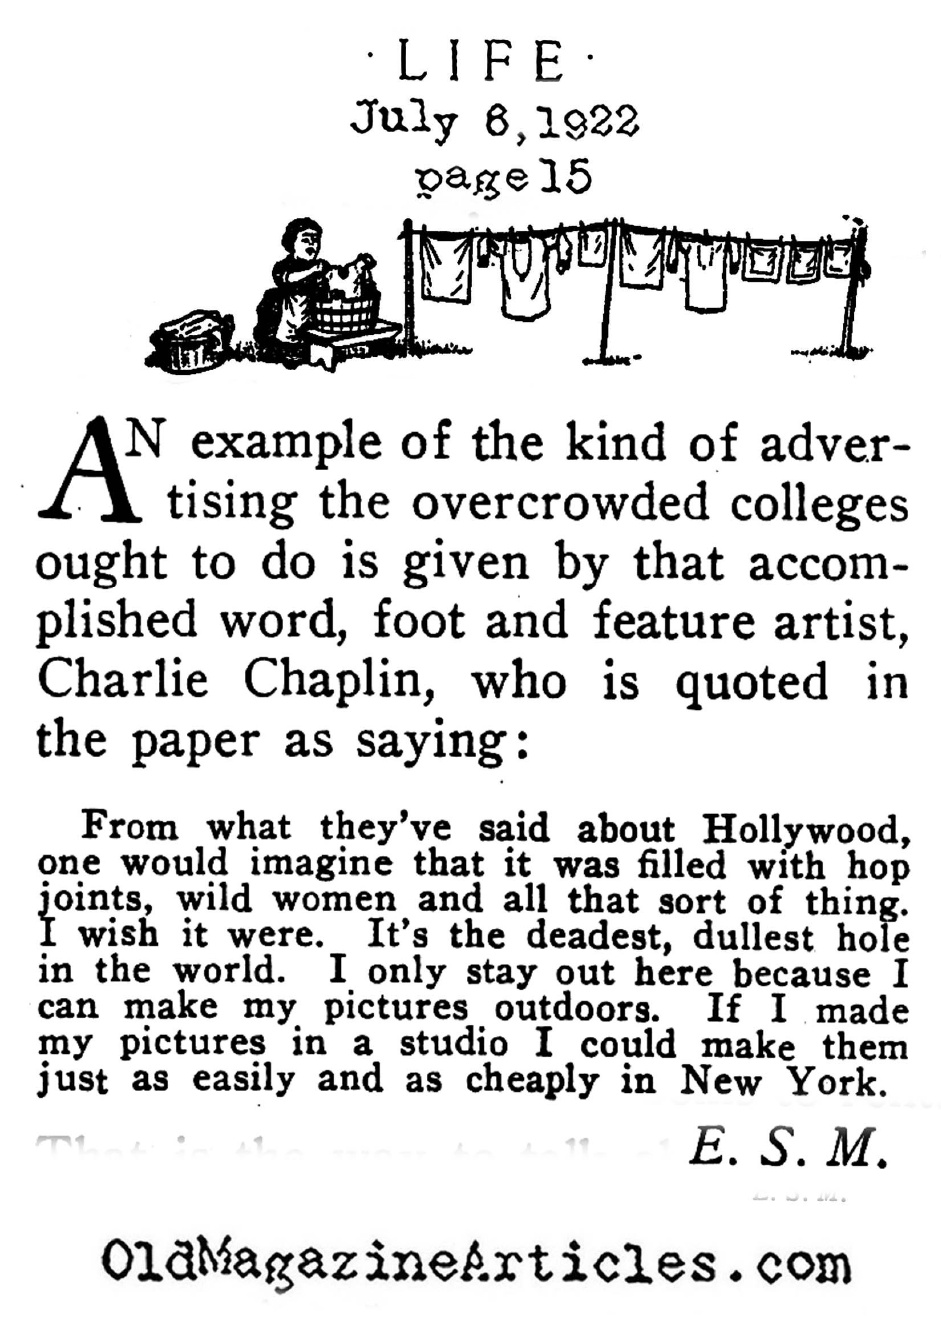 Charlie Chaplin Sounds-Off on Hollywood  (Life Magazine, 1922)